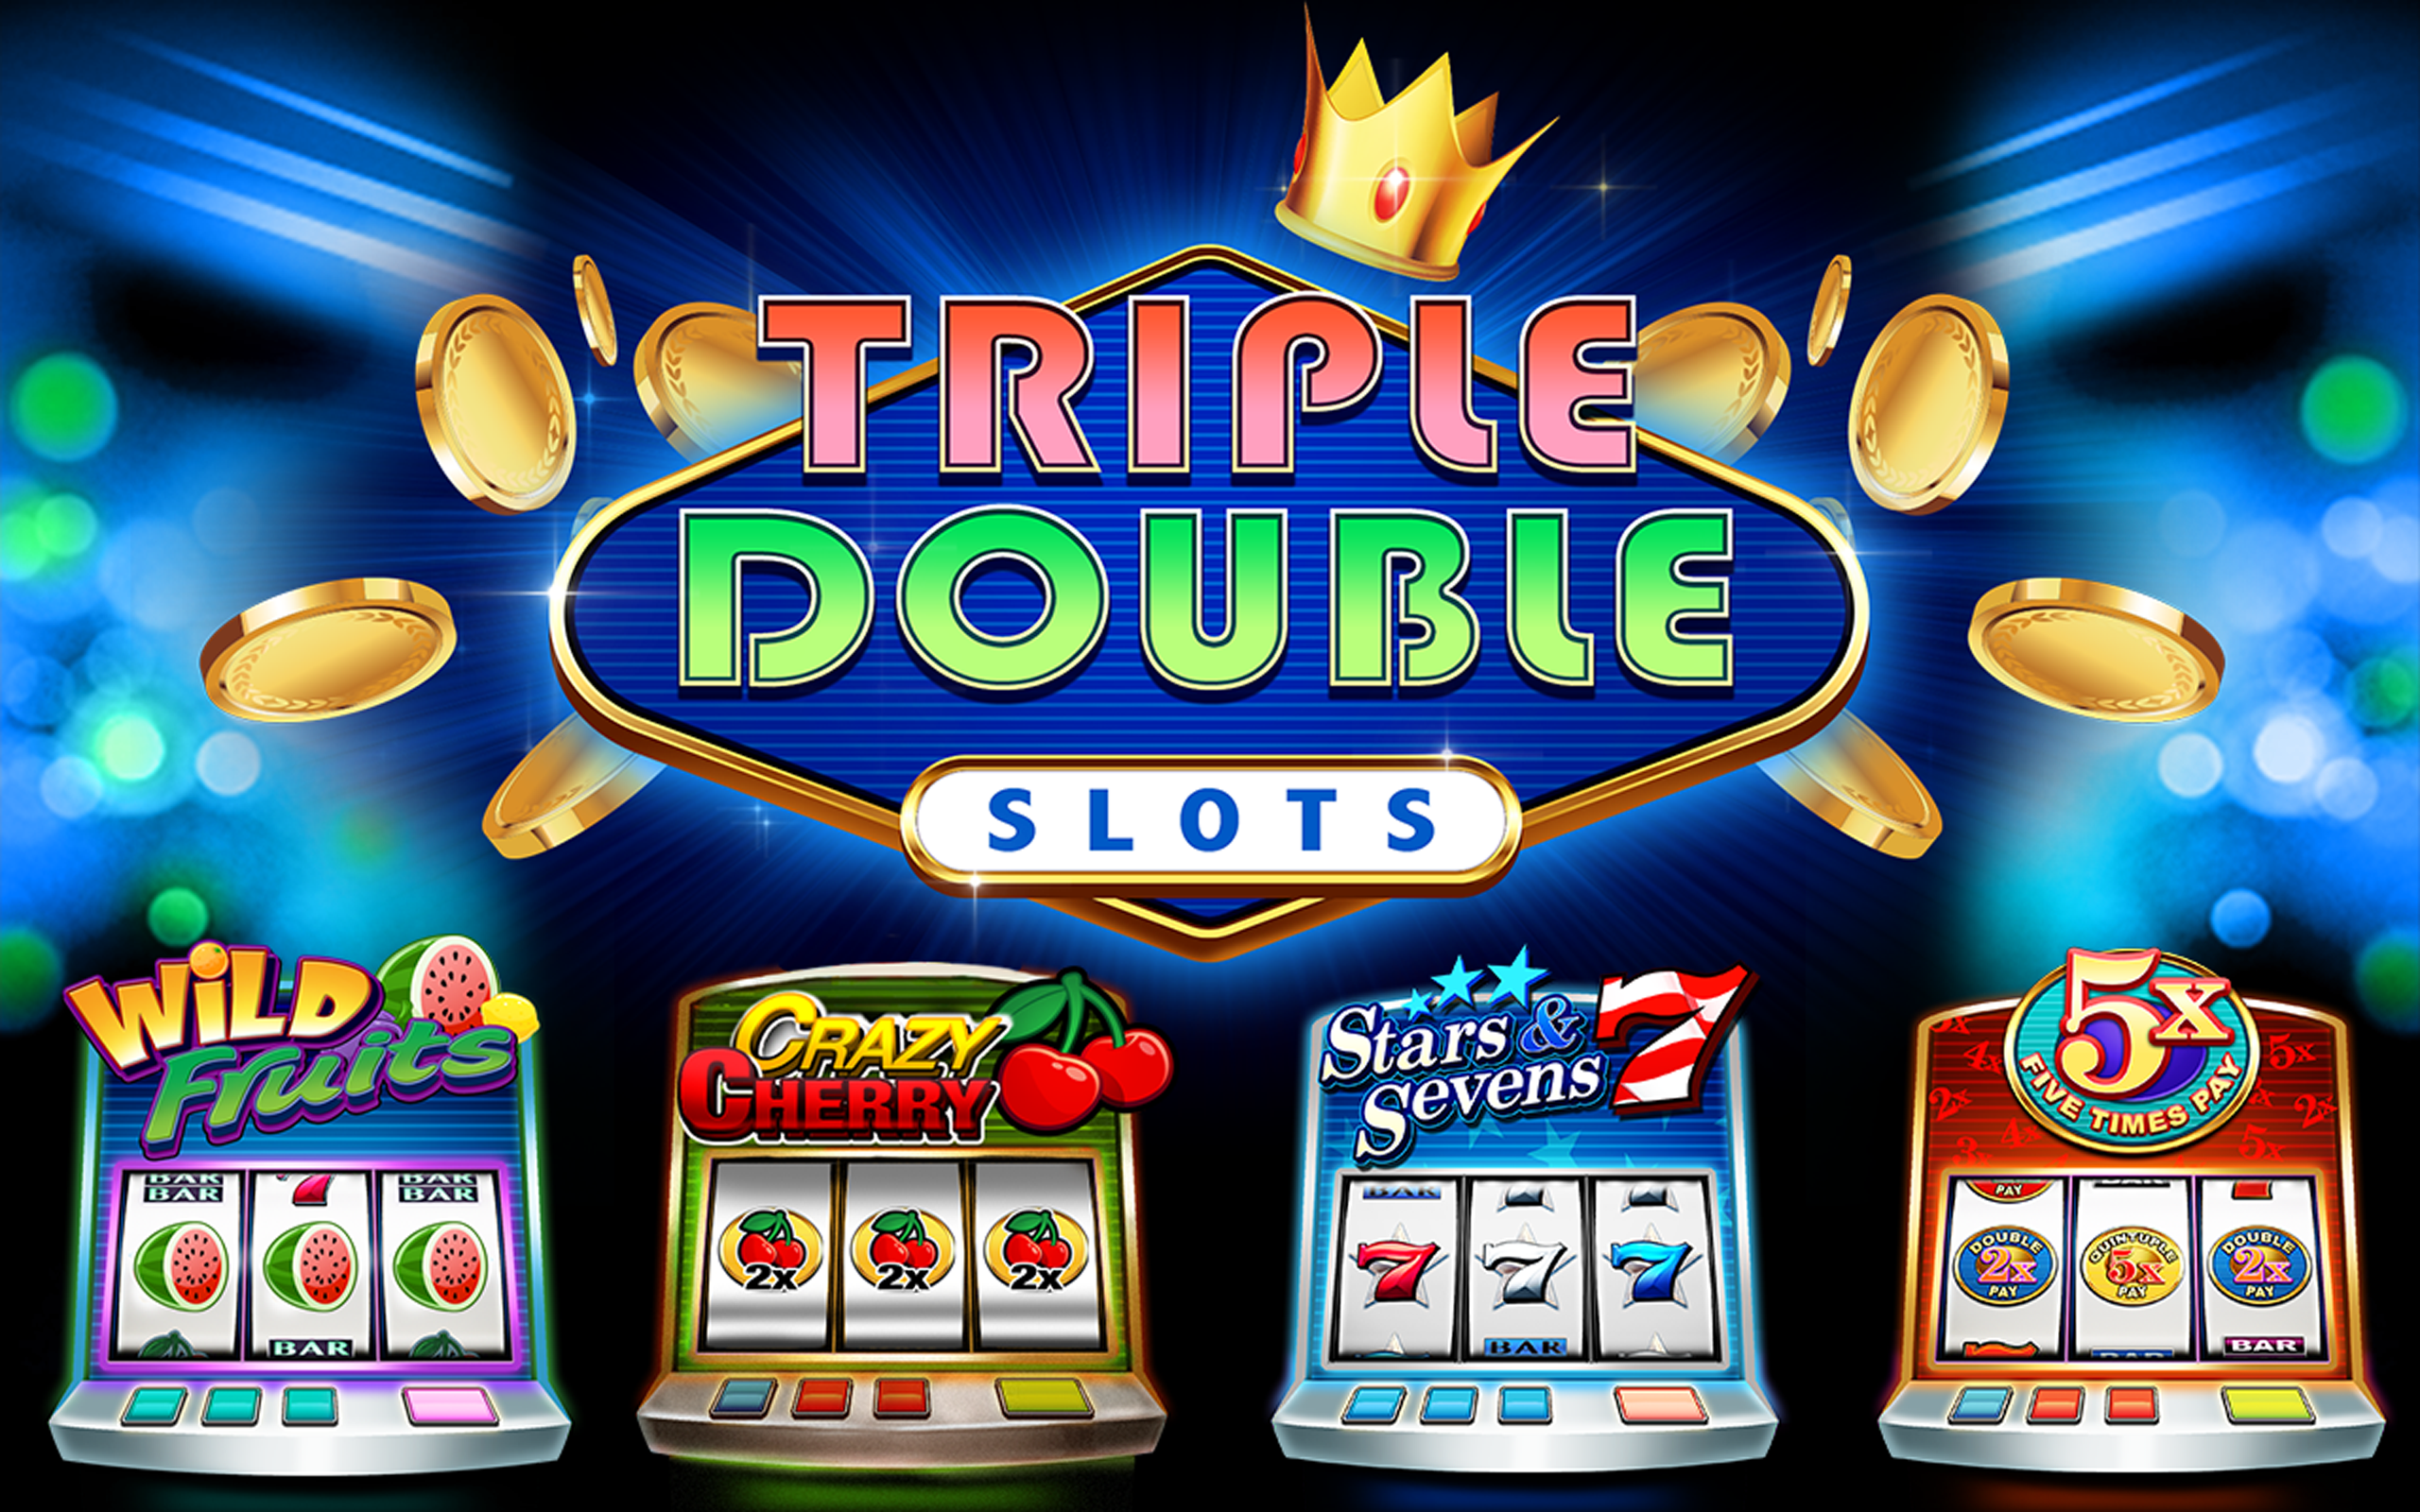 Triple double slots free